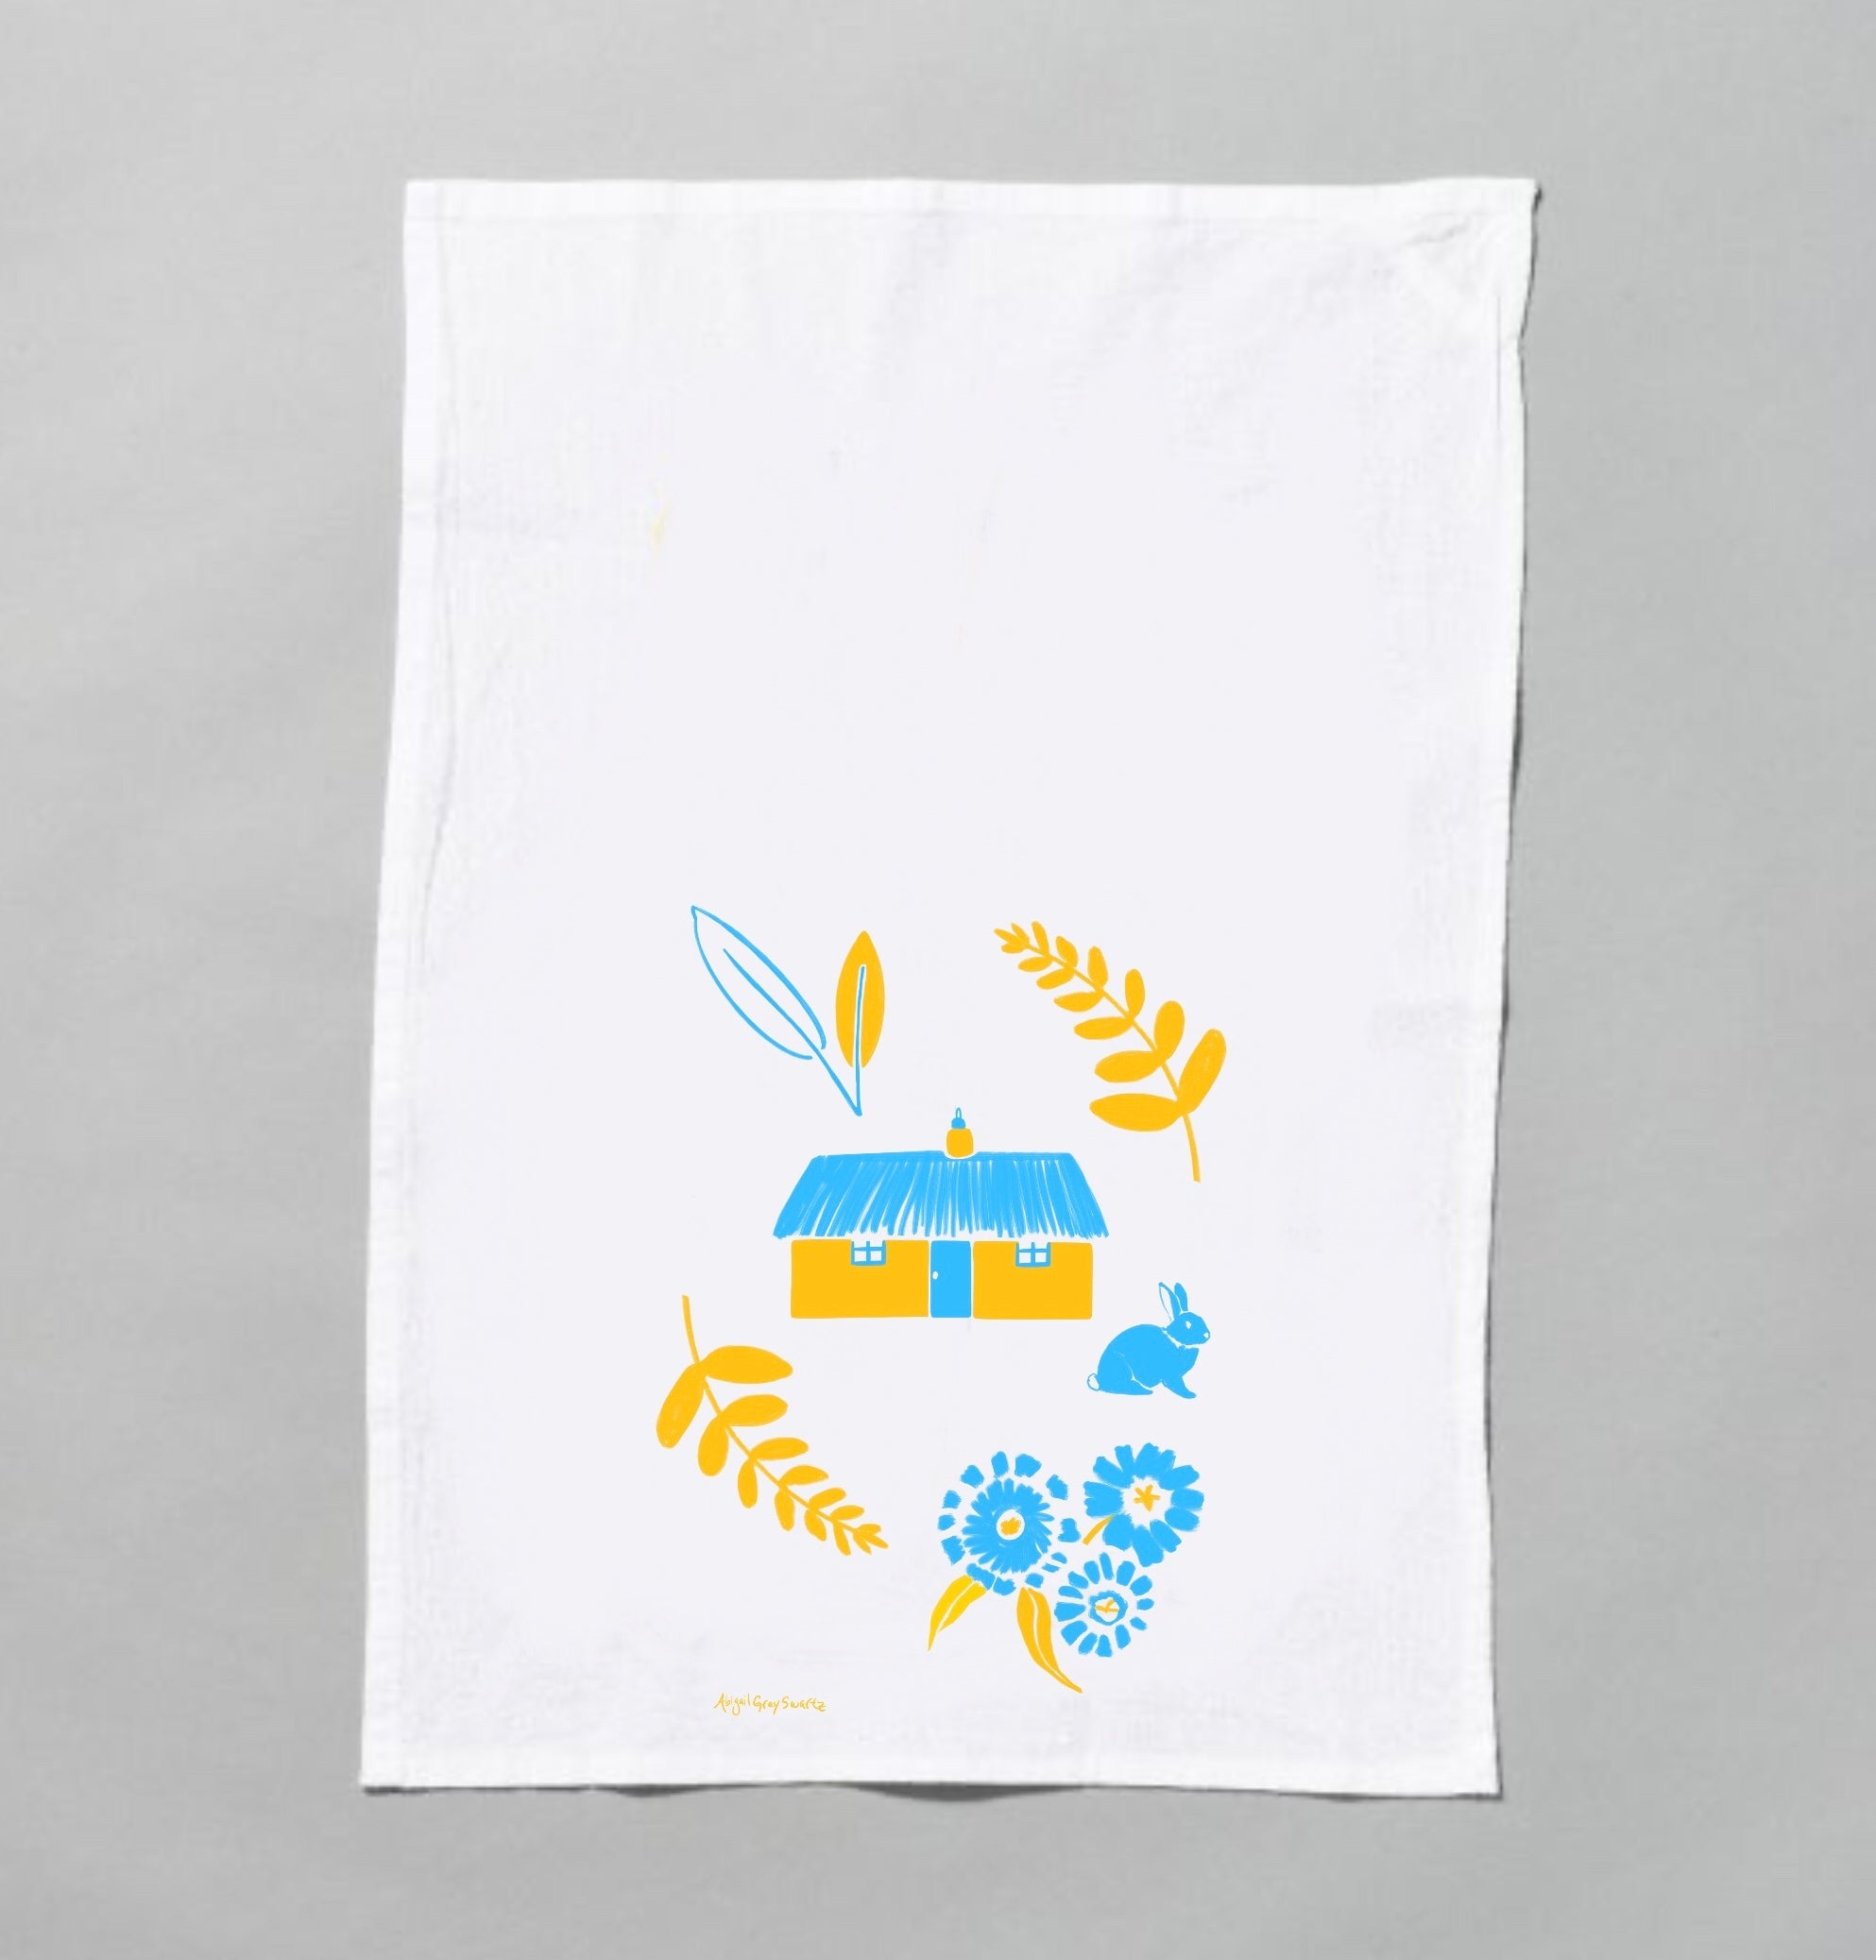 Screen Printed Tea Towels  Wholesale Tea Towel Printing — Mary's